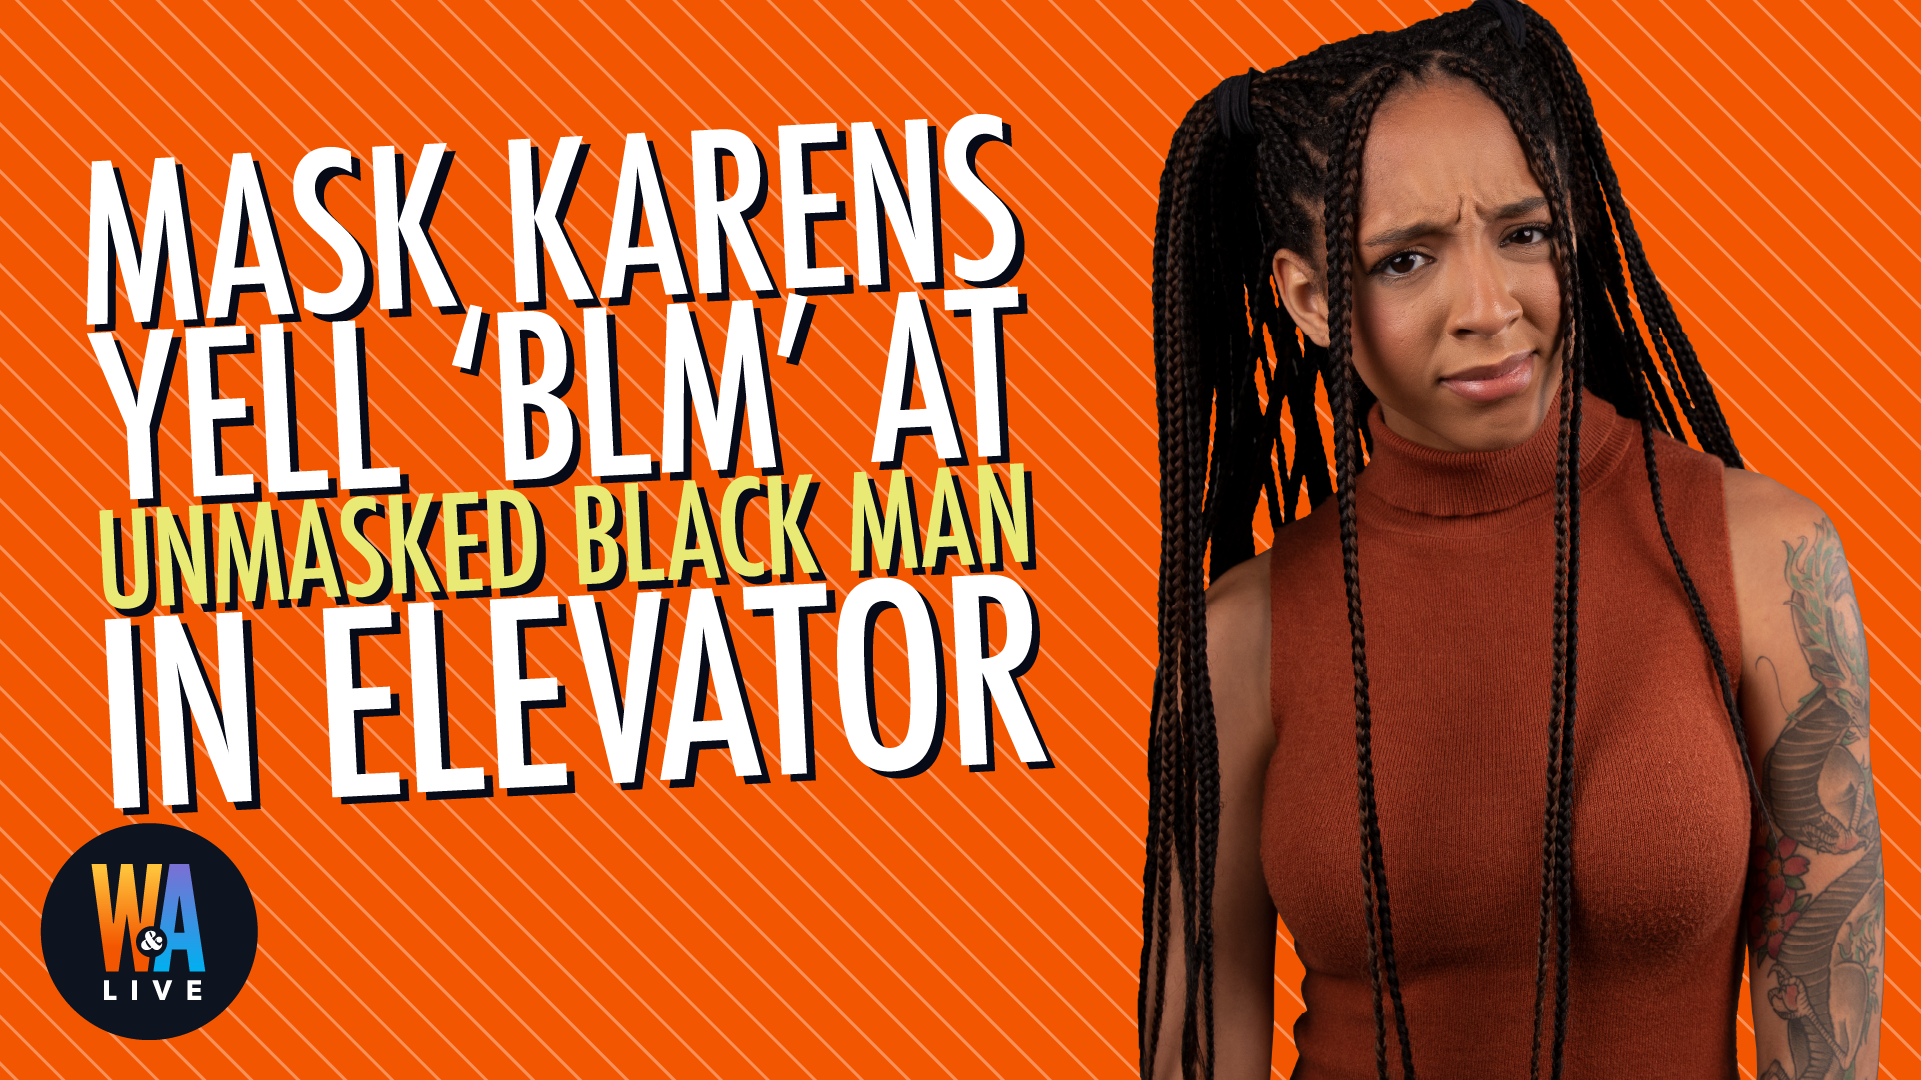 Mask Karens Yell “BLM” at Unmasked Black Man in Elevator